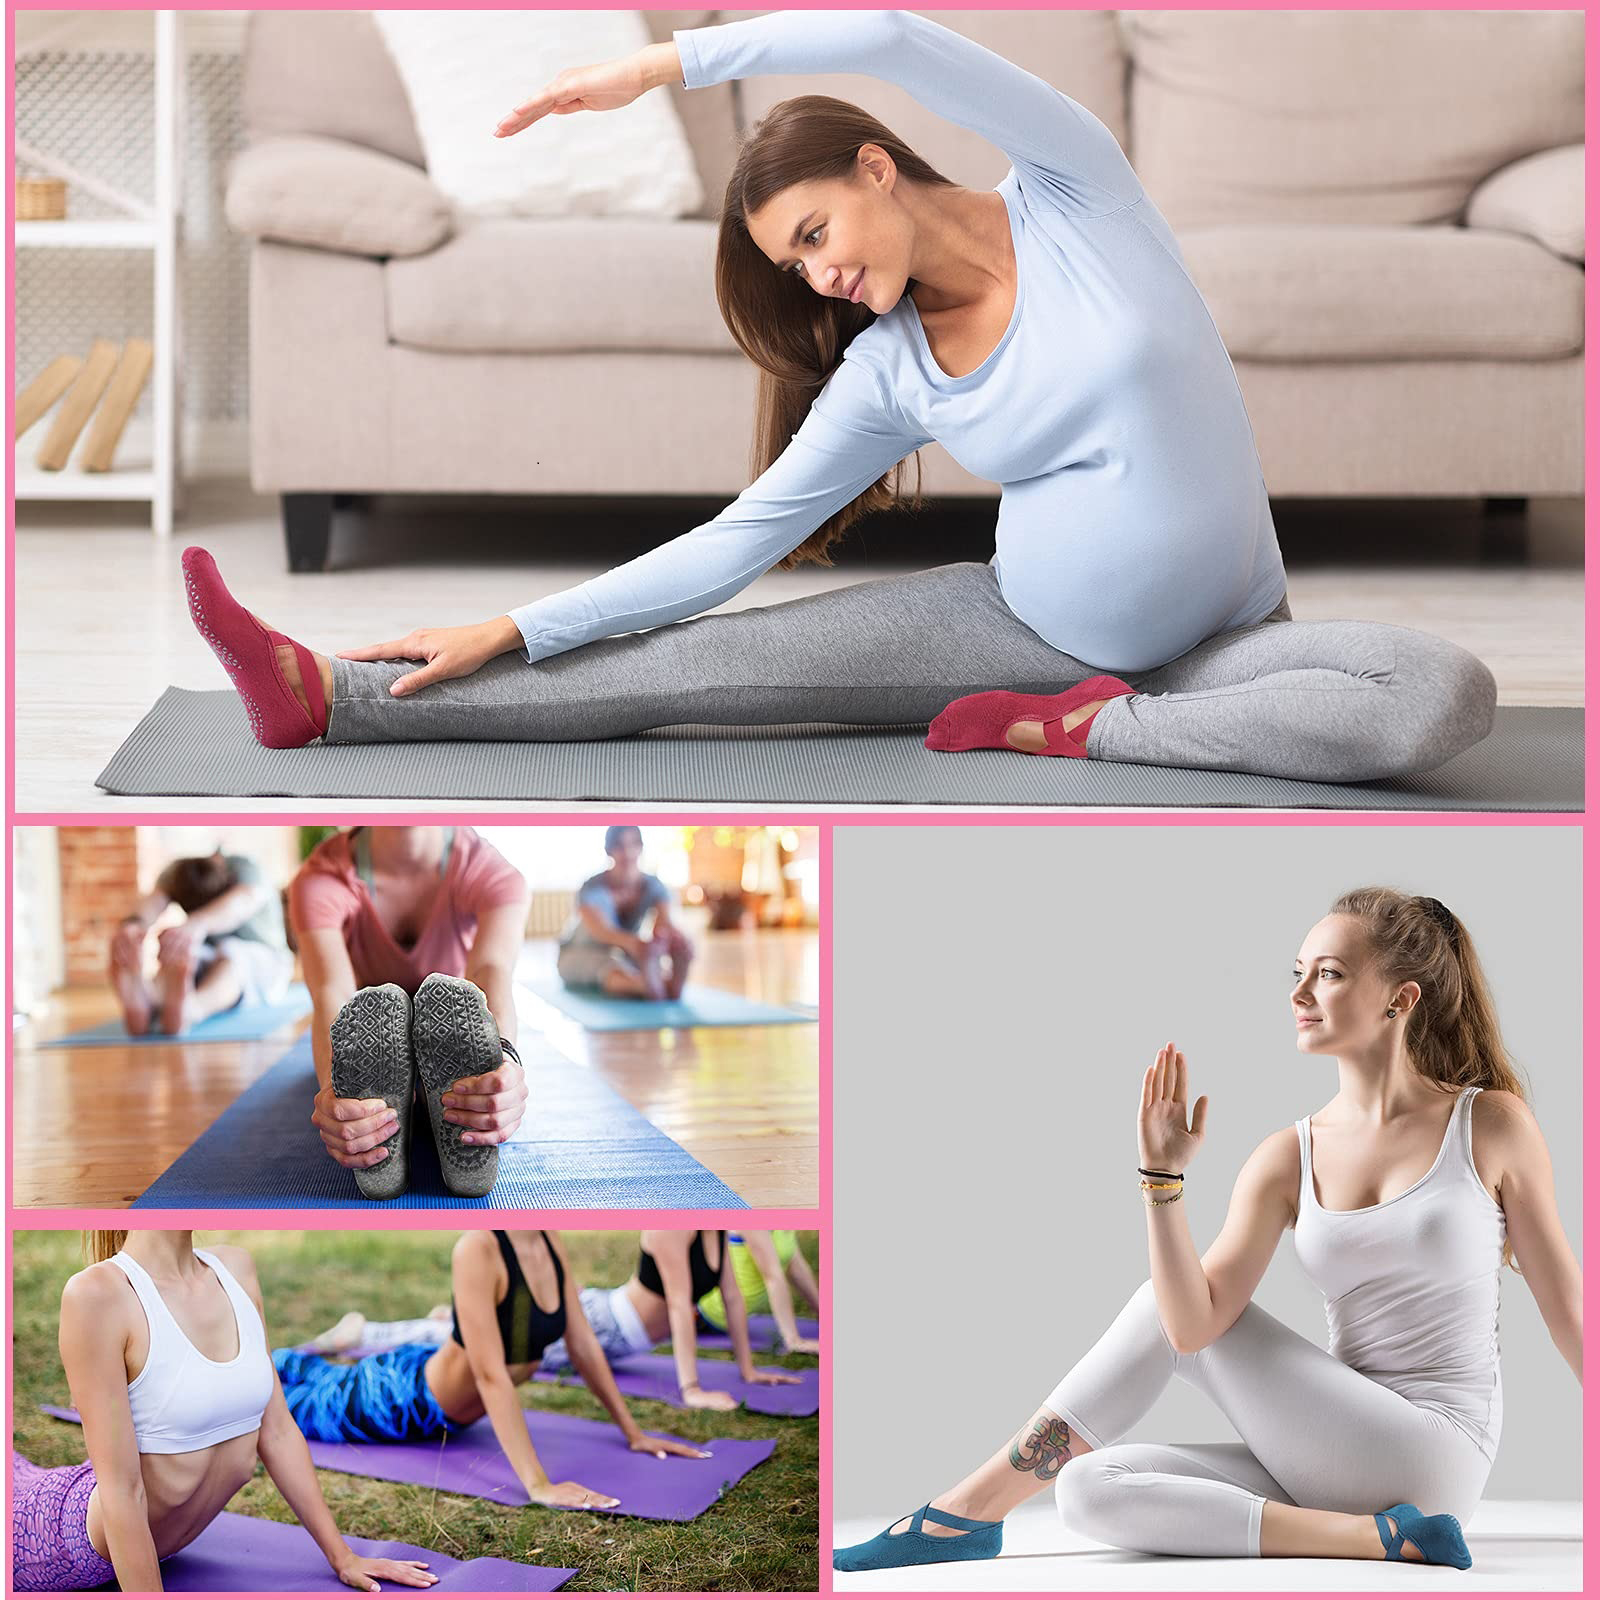 1pc Anti-slip Yoga Trampoline Socks With Grips, Exercise Floor